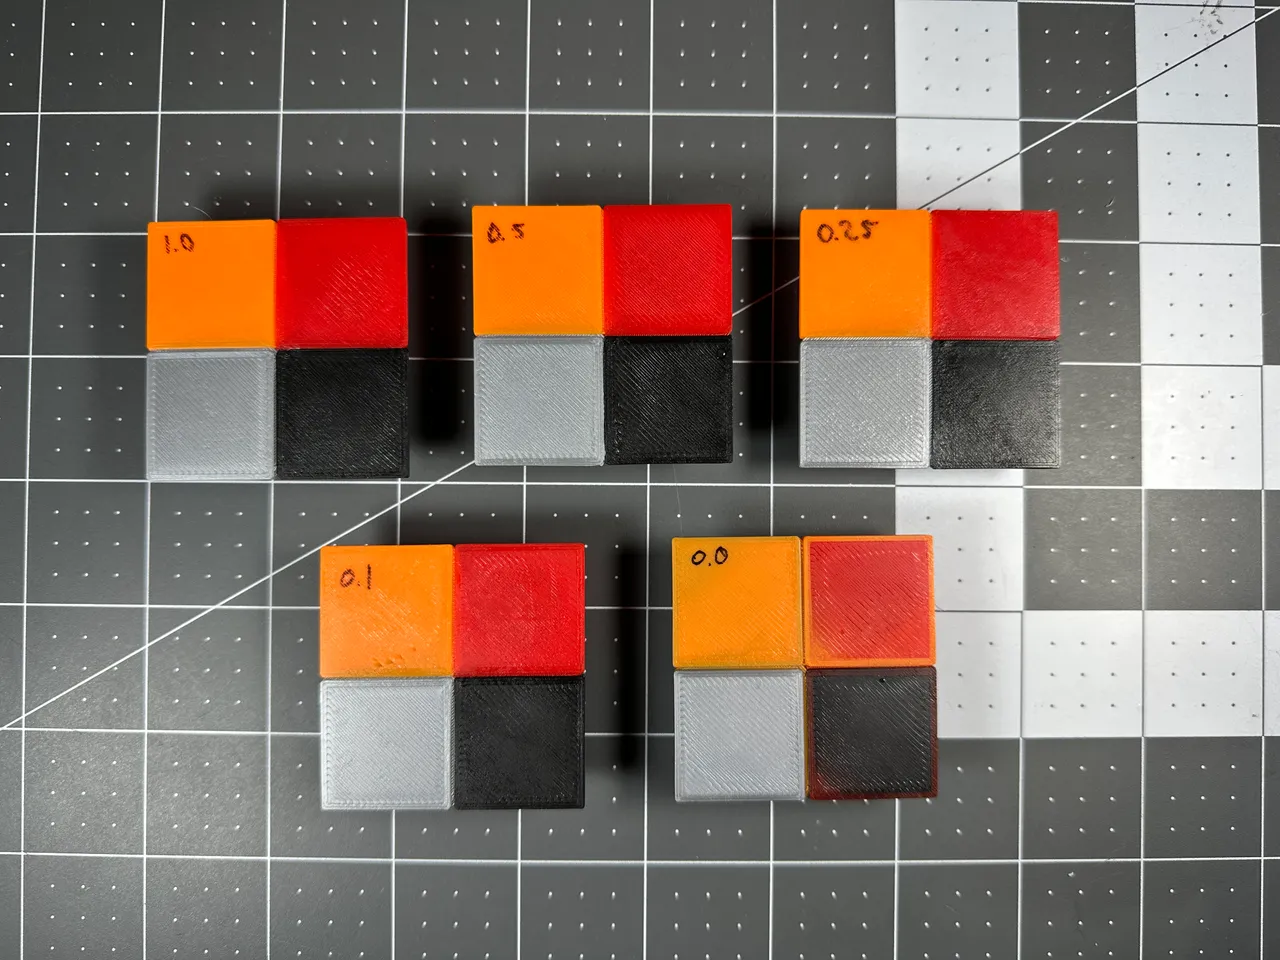 AMS Printing Custom Printed Colored Paper Tags